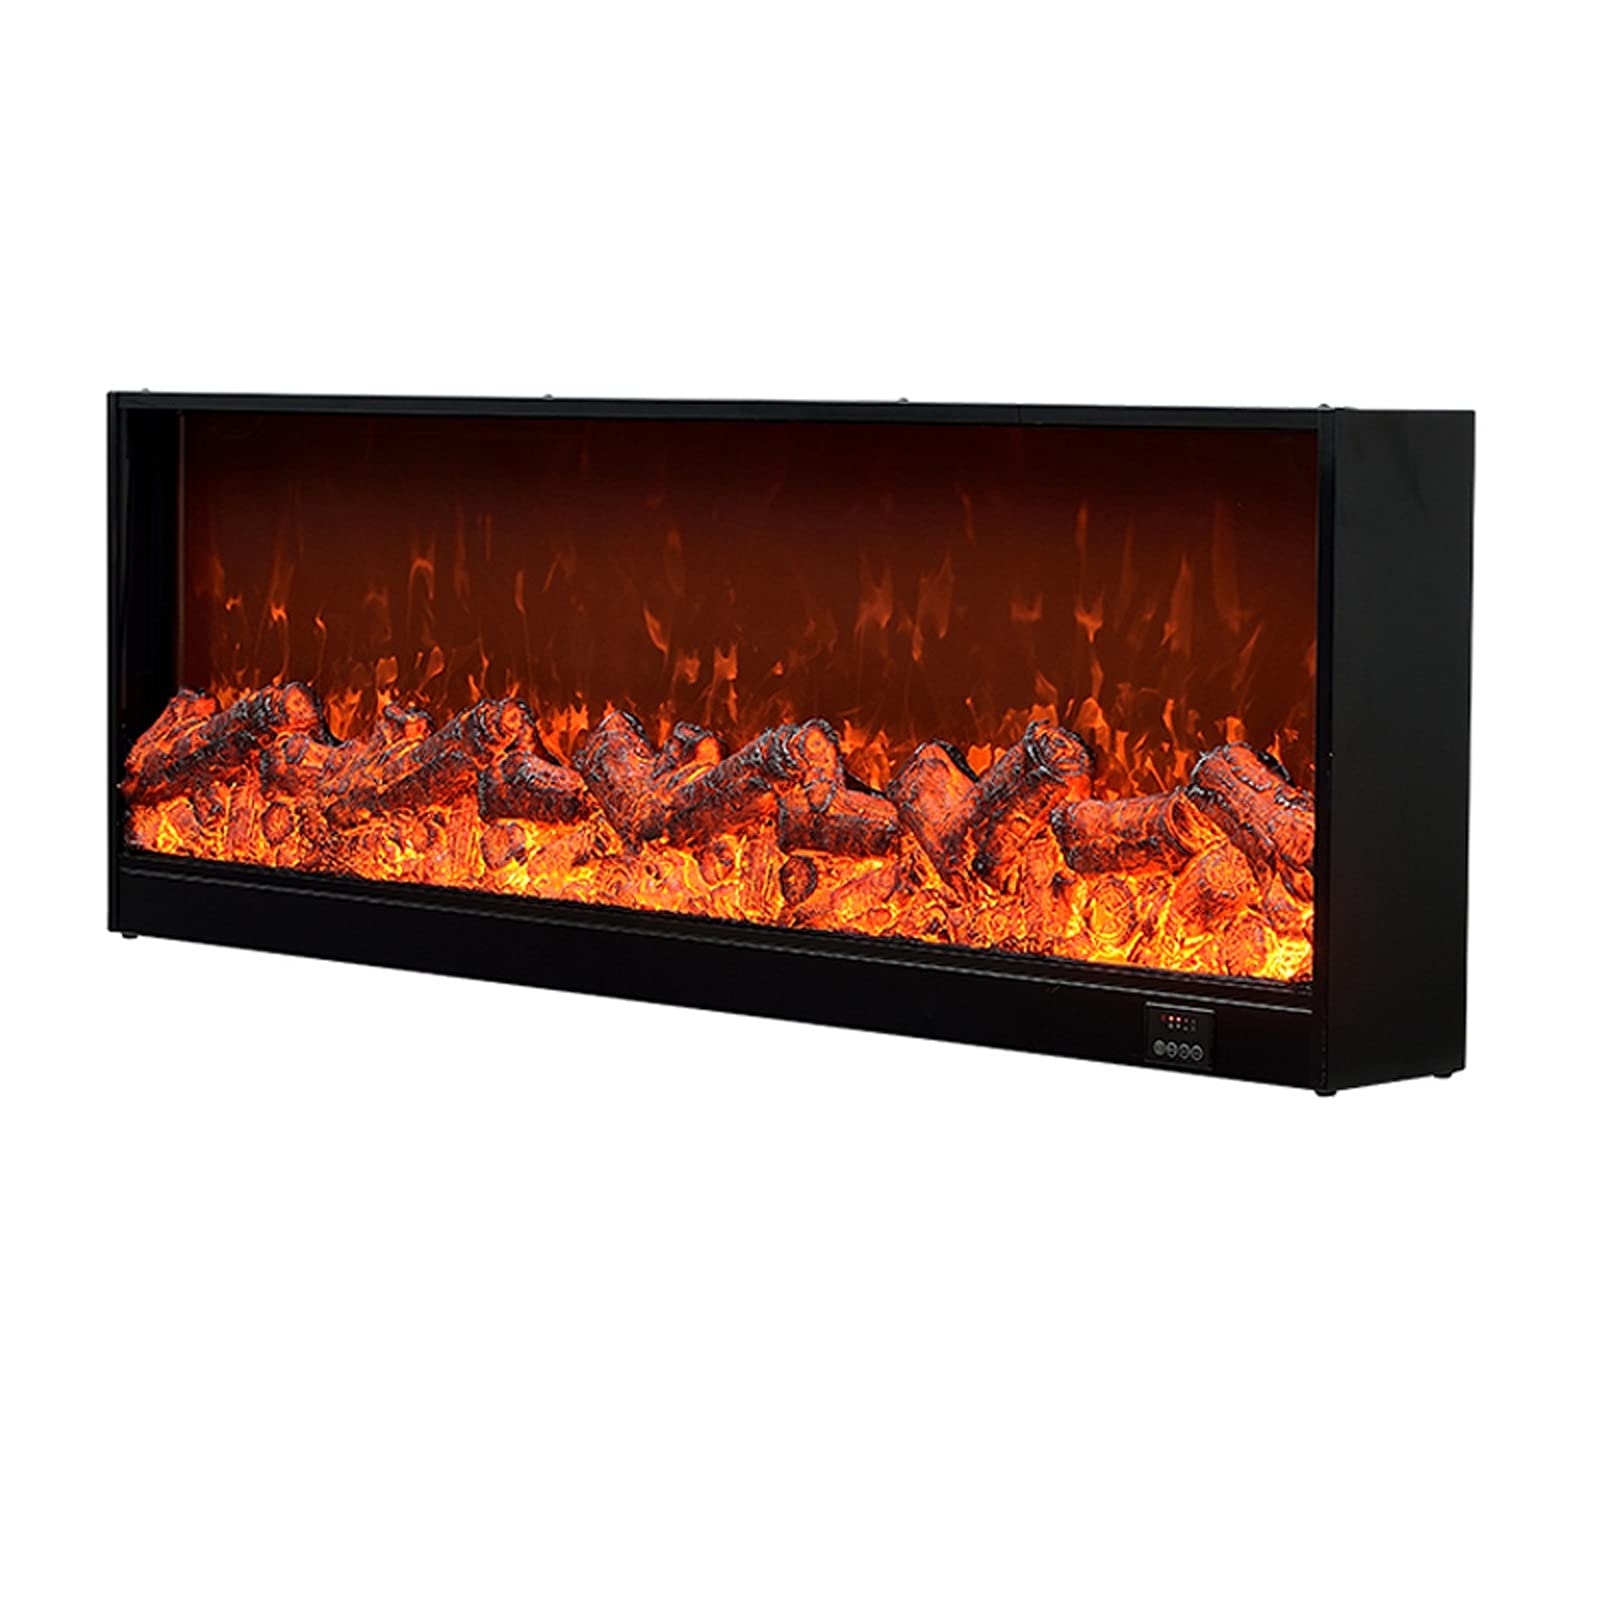 Fireplace with a dream-like flame